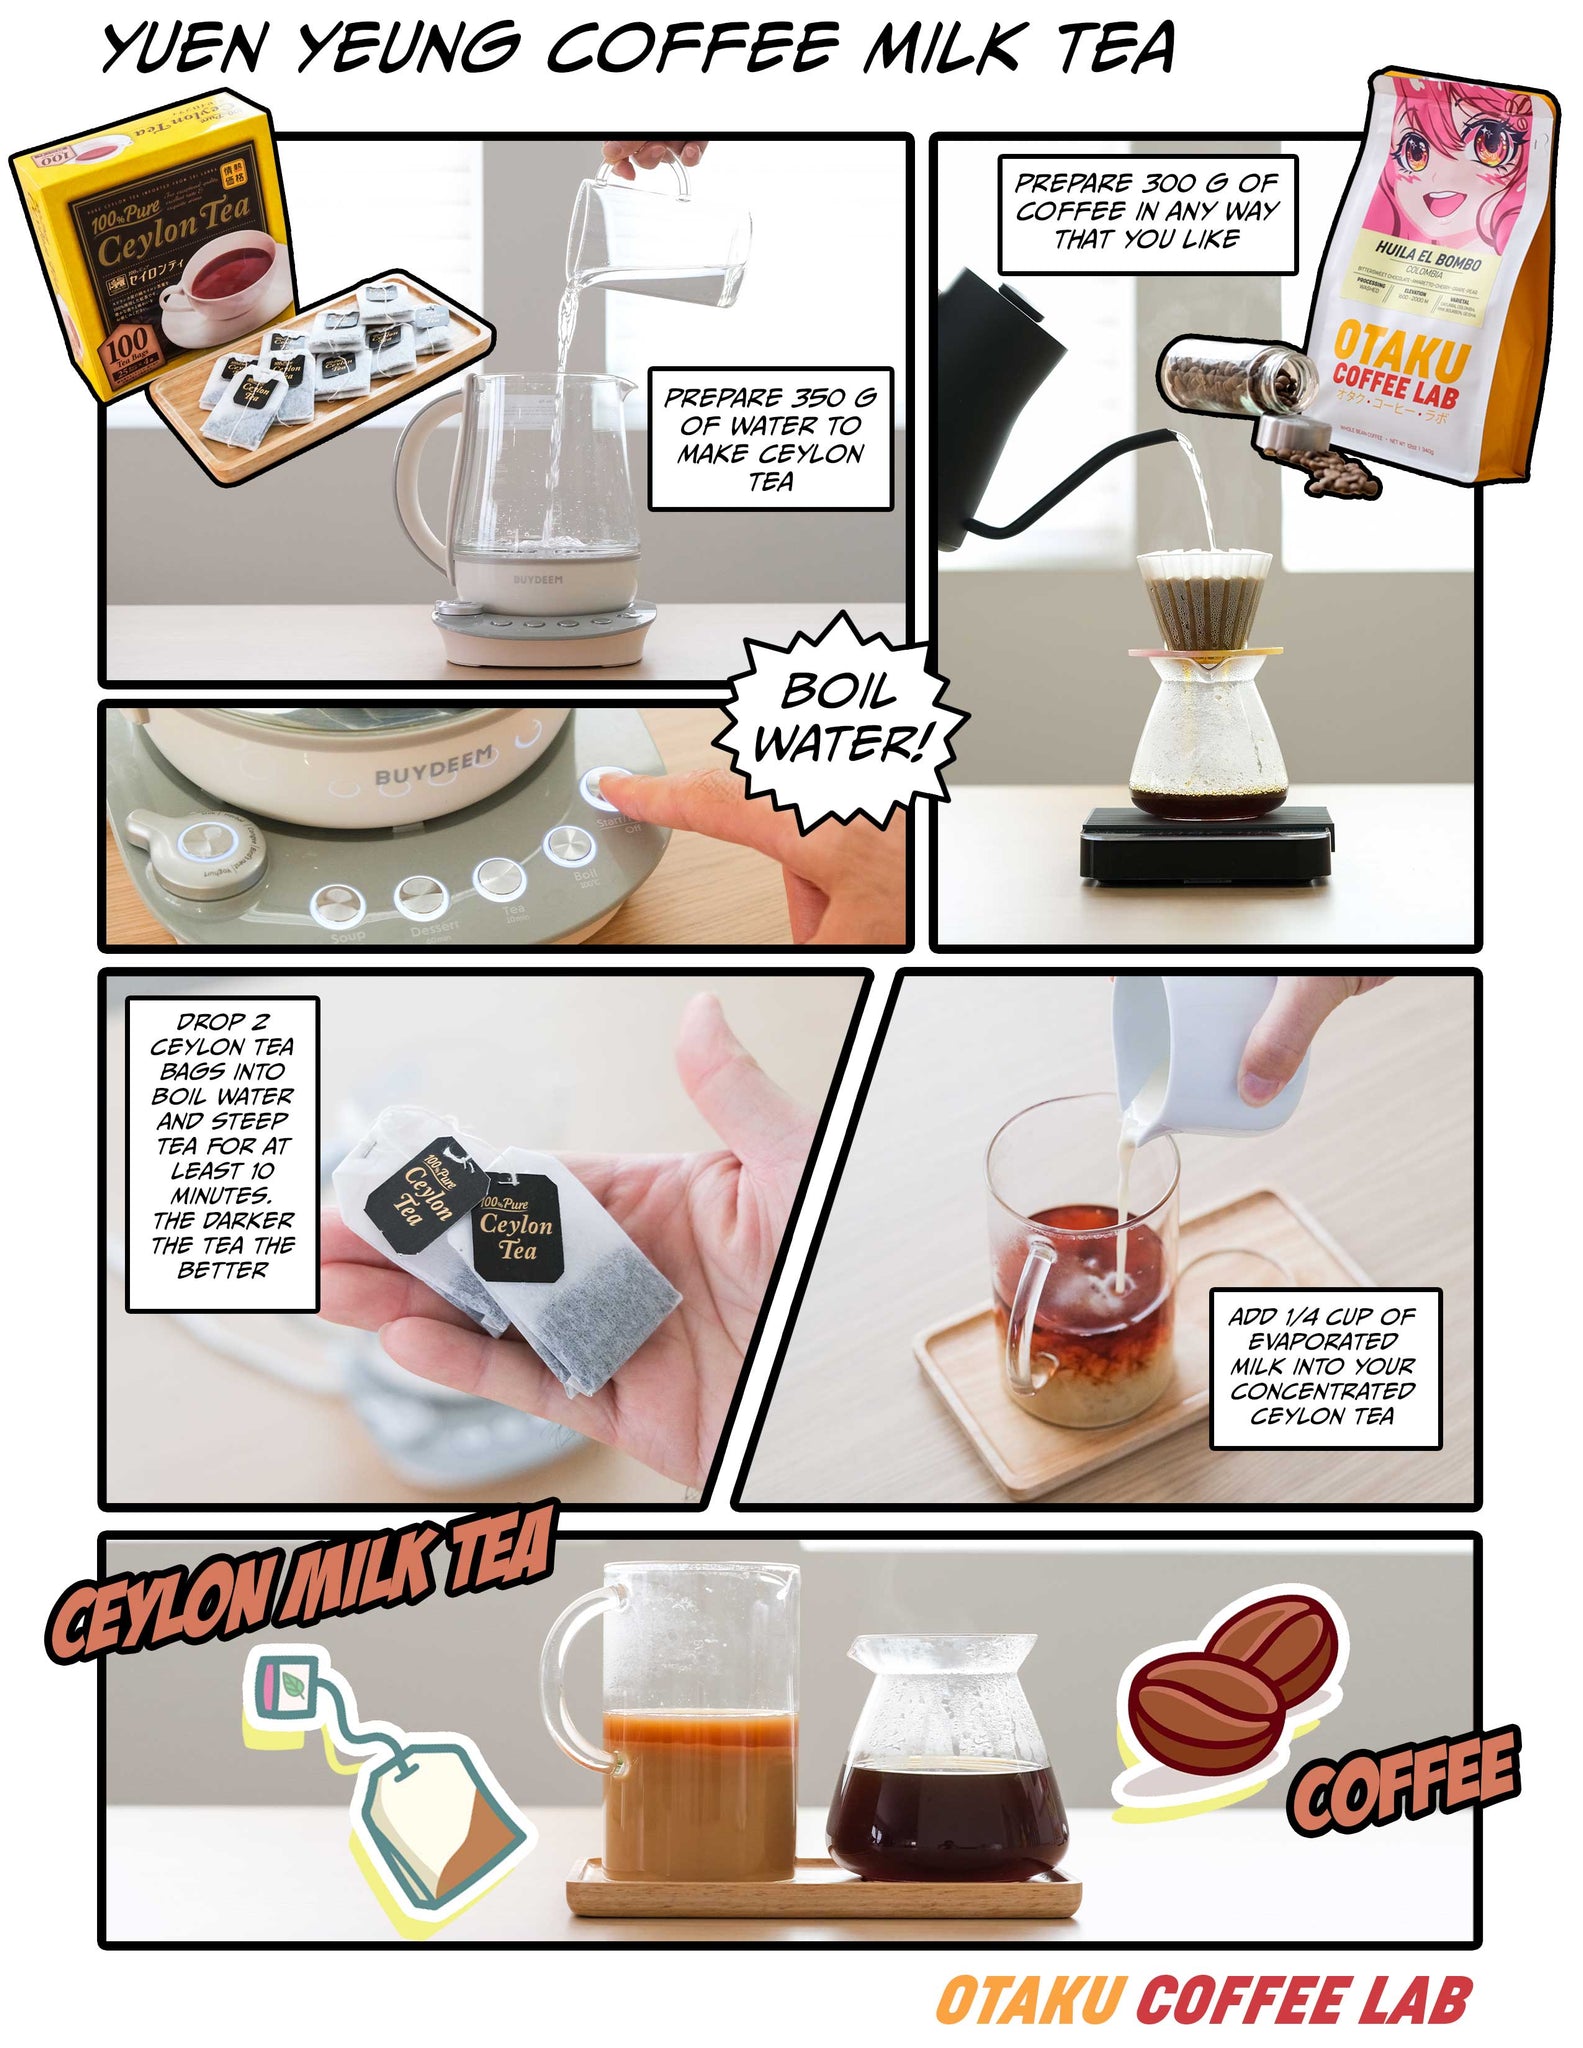 Otaku Coffee Lab coffee recipe manga illustrating how to make Yuen Yeung Coffee Milk Tea